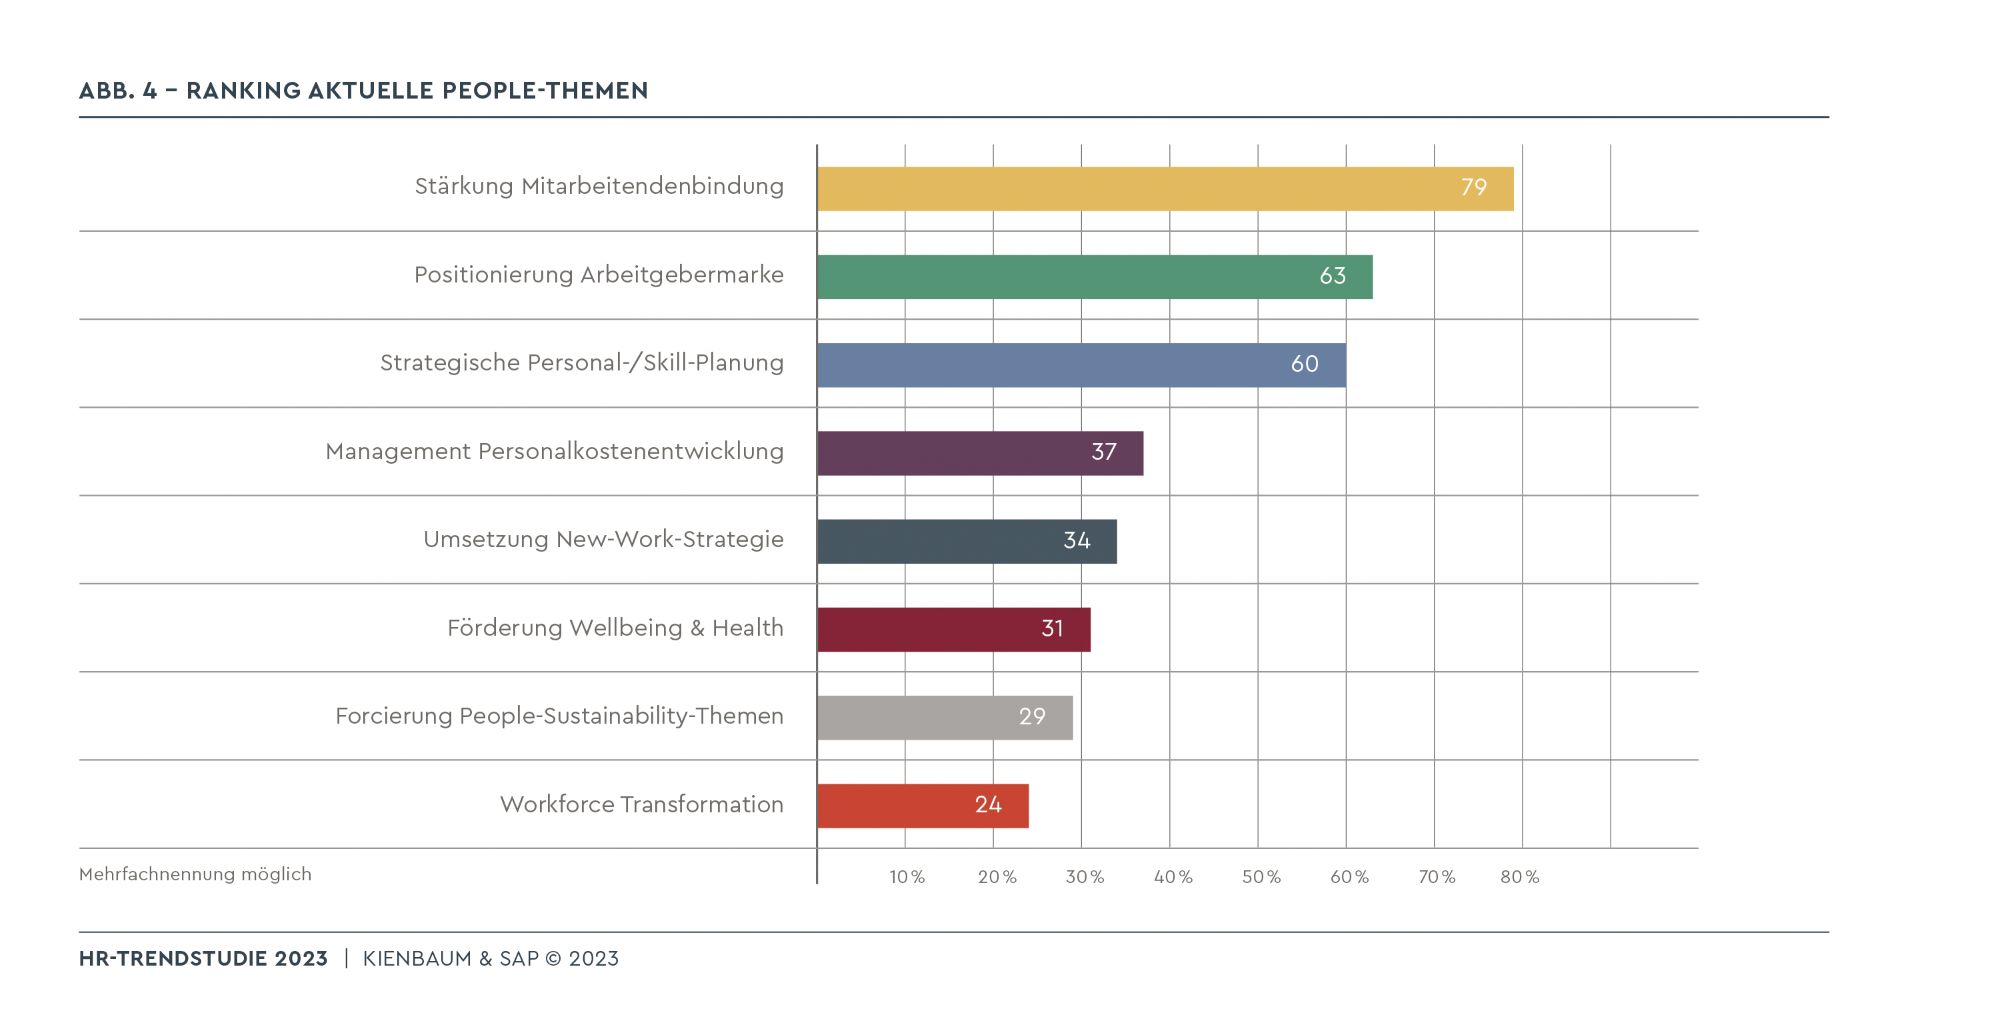 HR-Trendstudie 2023 | Ranking aktuelle People-Themen